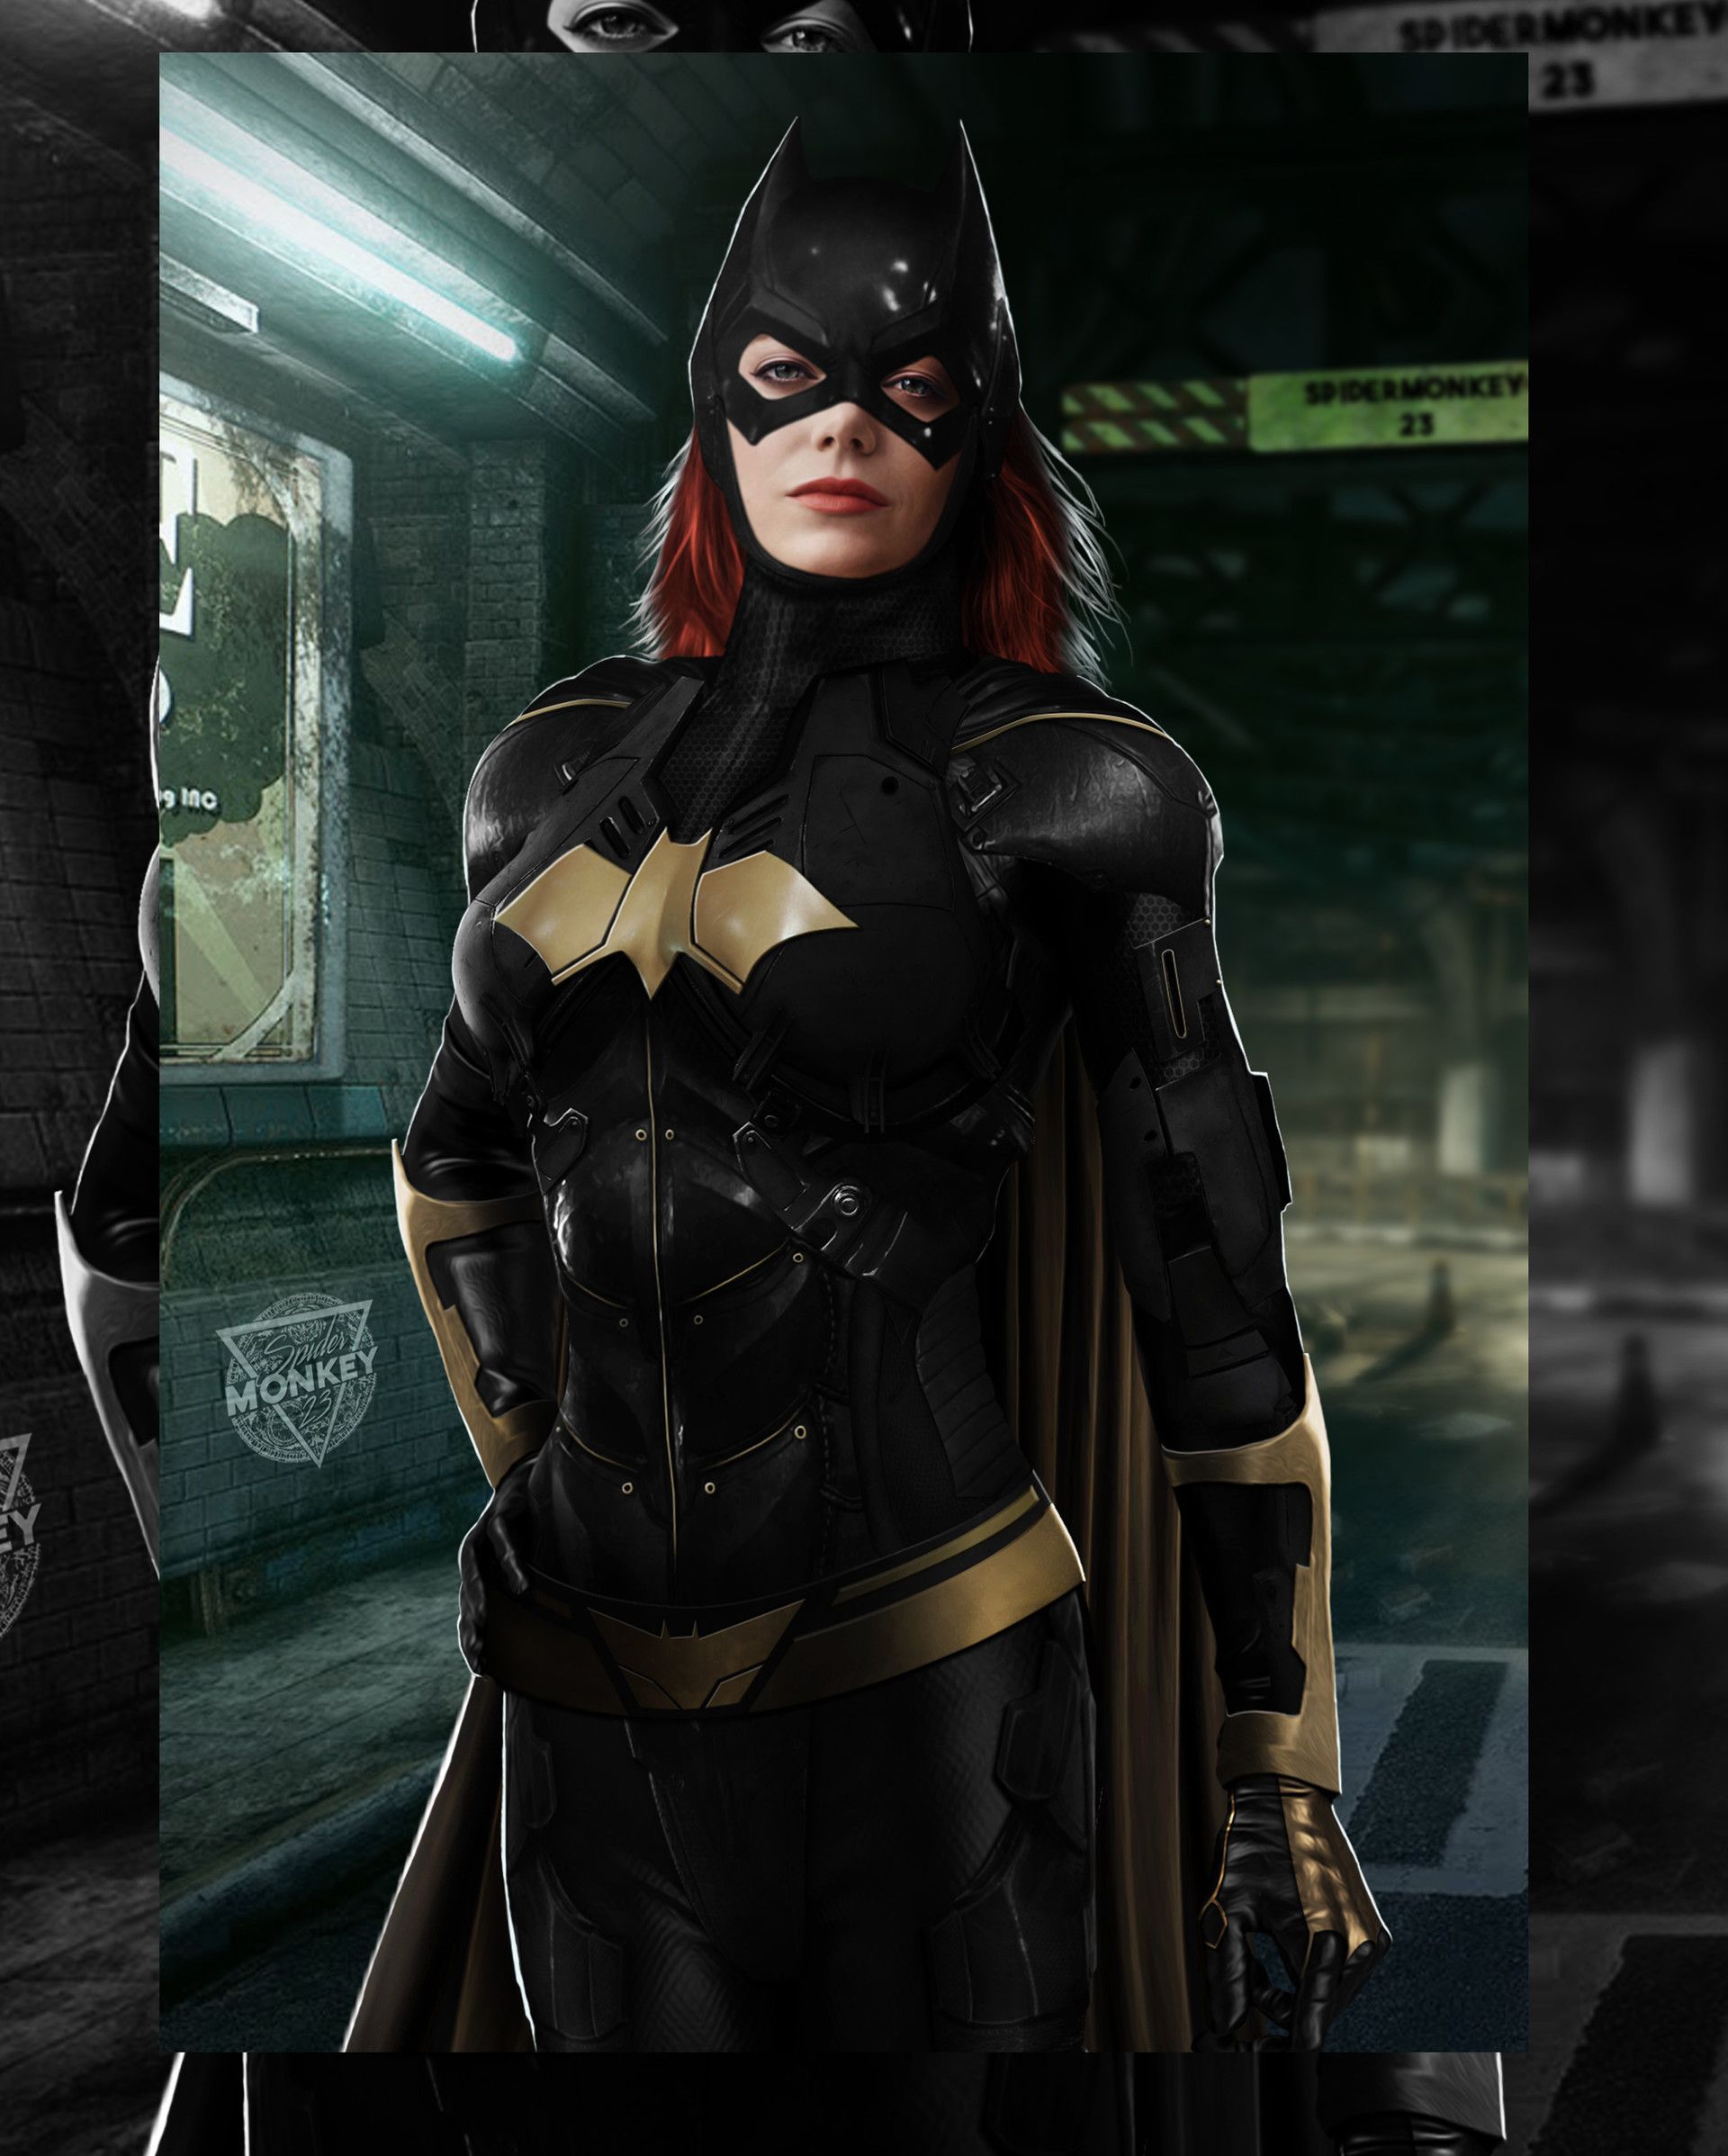 Emma Stone as Batgirl